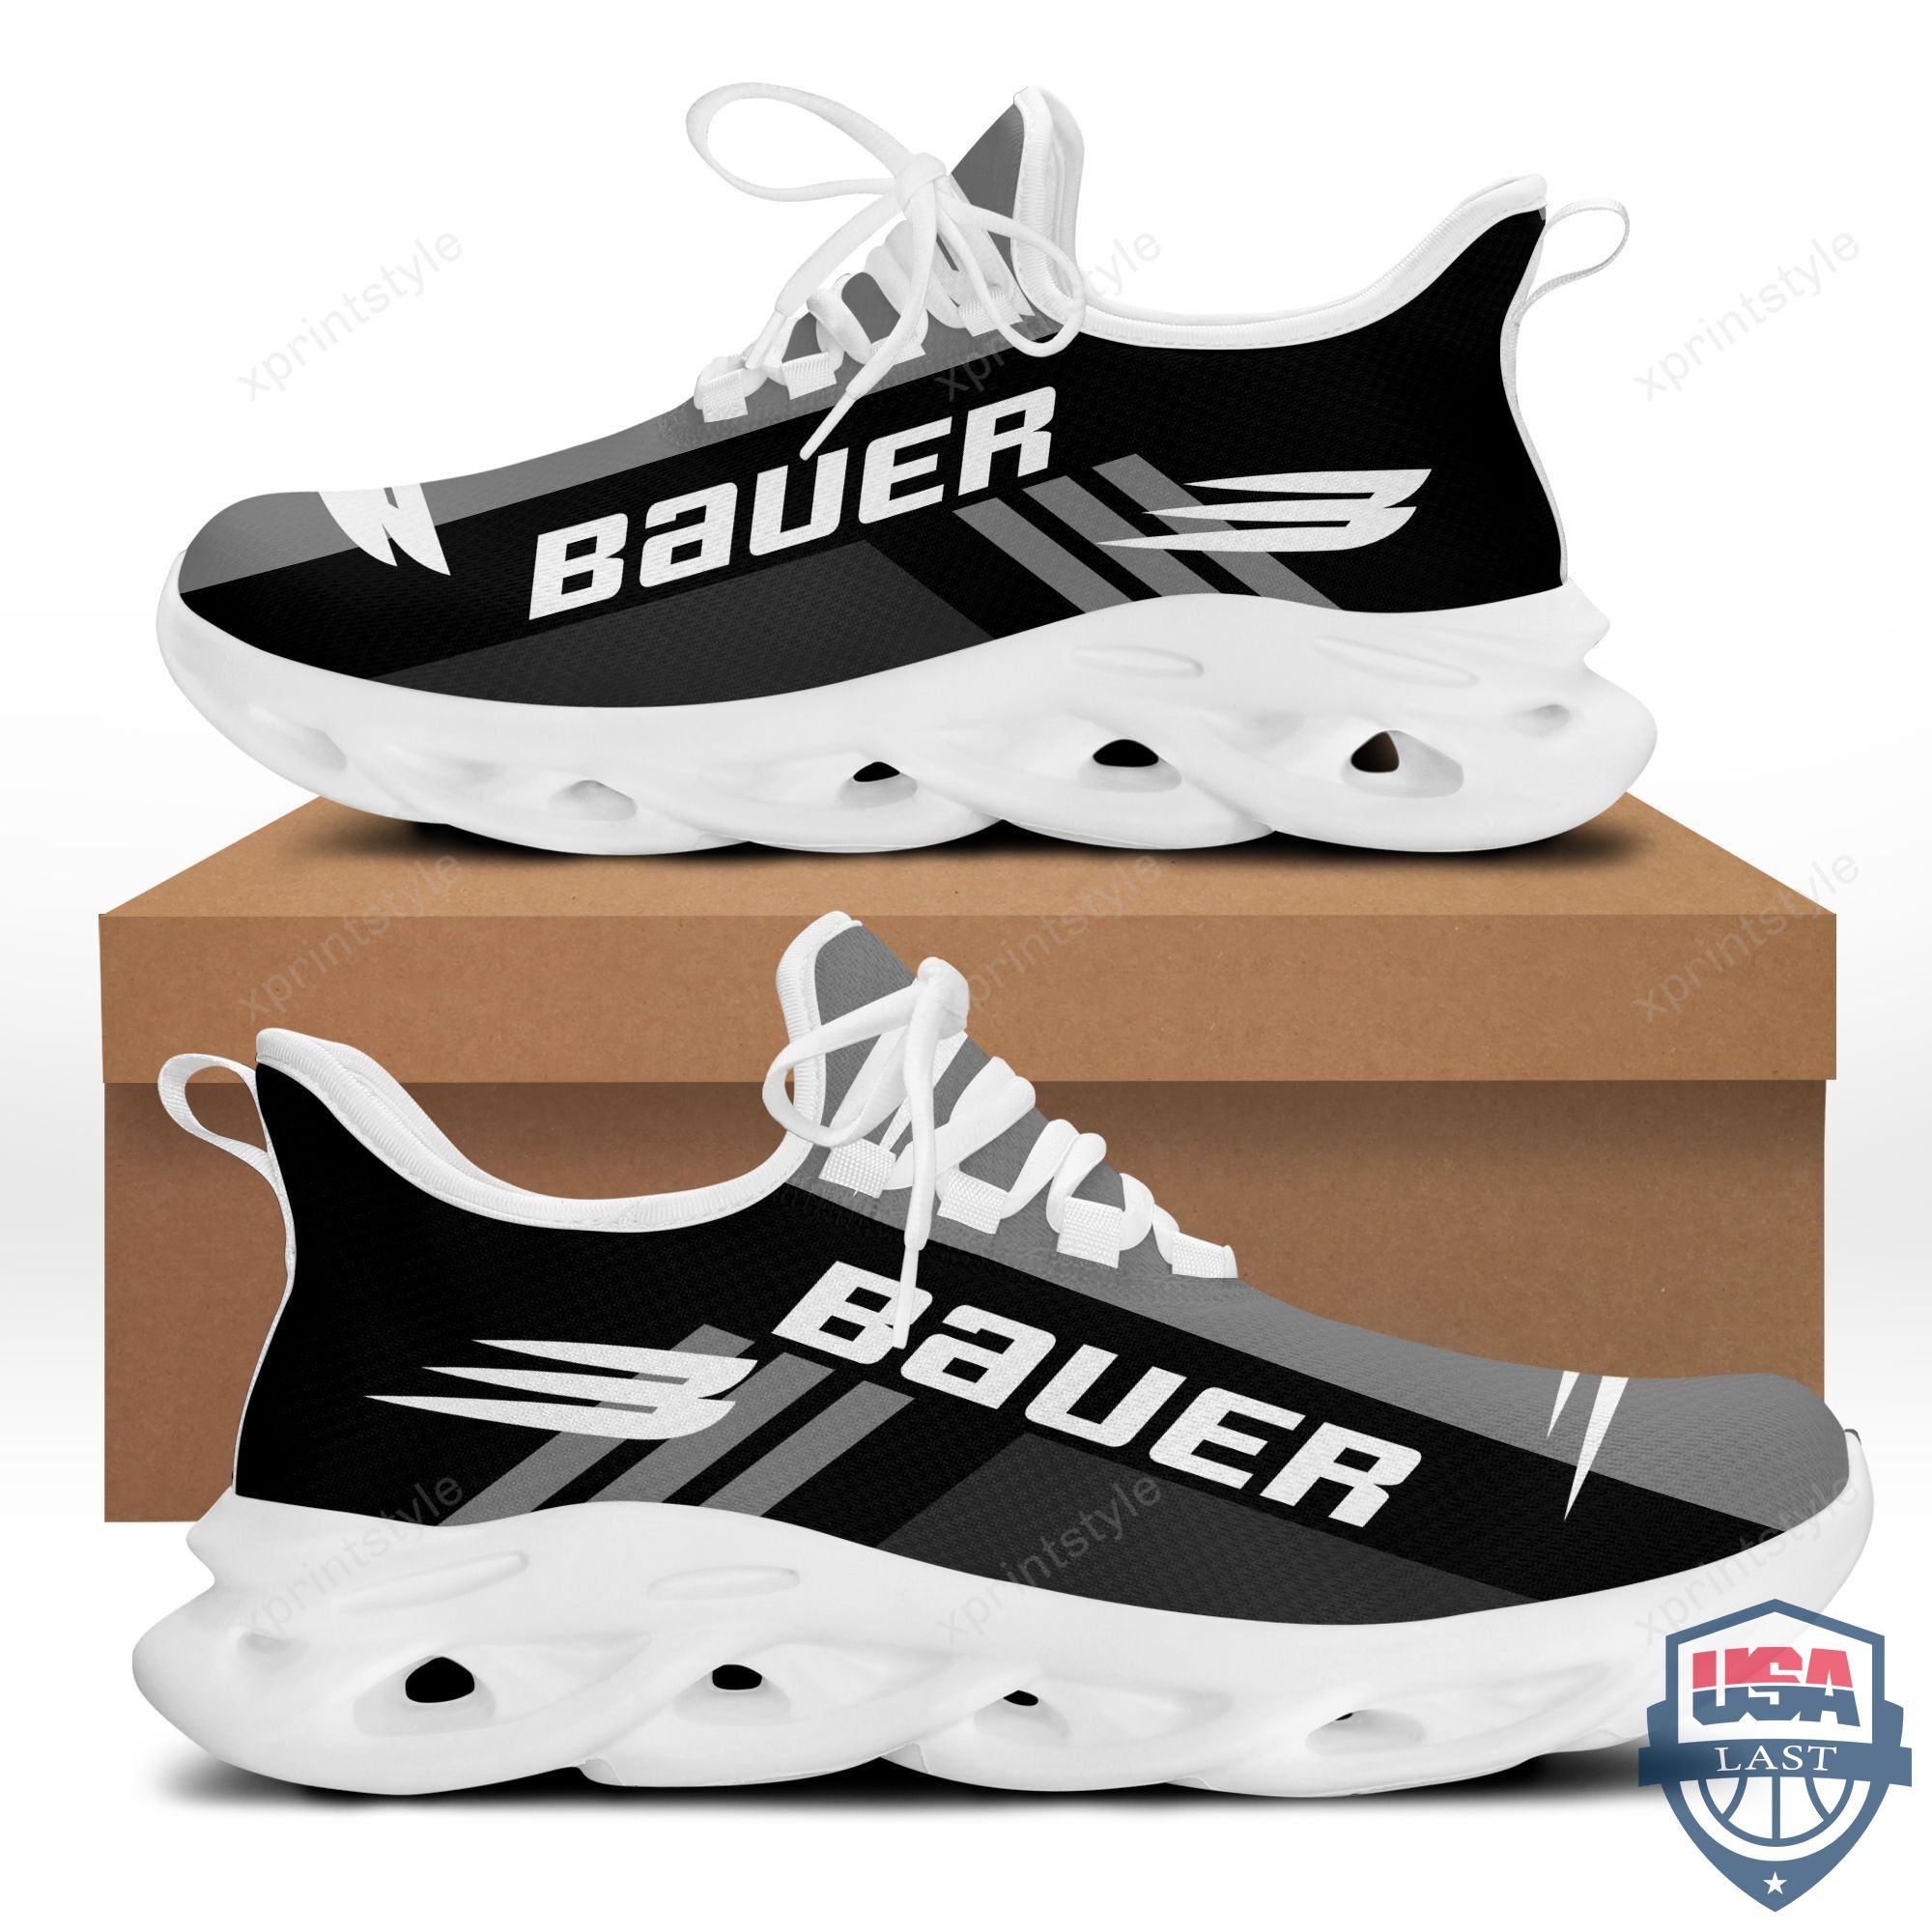 Top Trending – Bauer Max Soul Shoes Grey Version